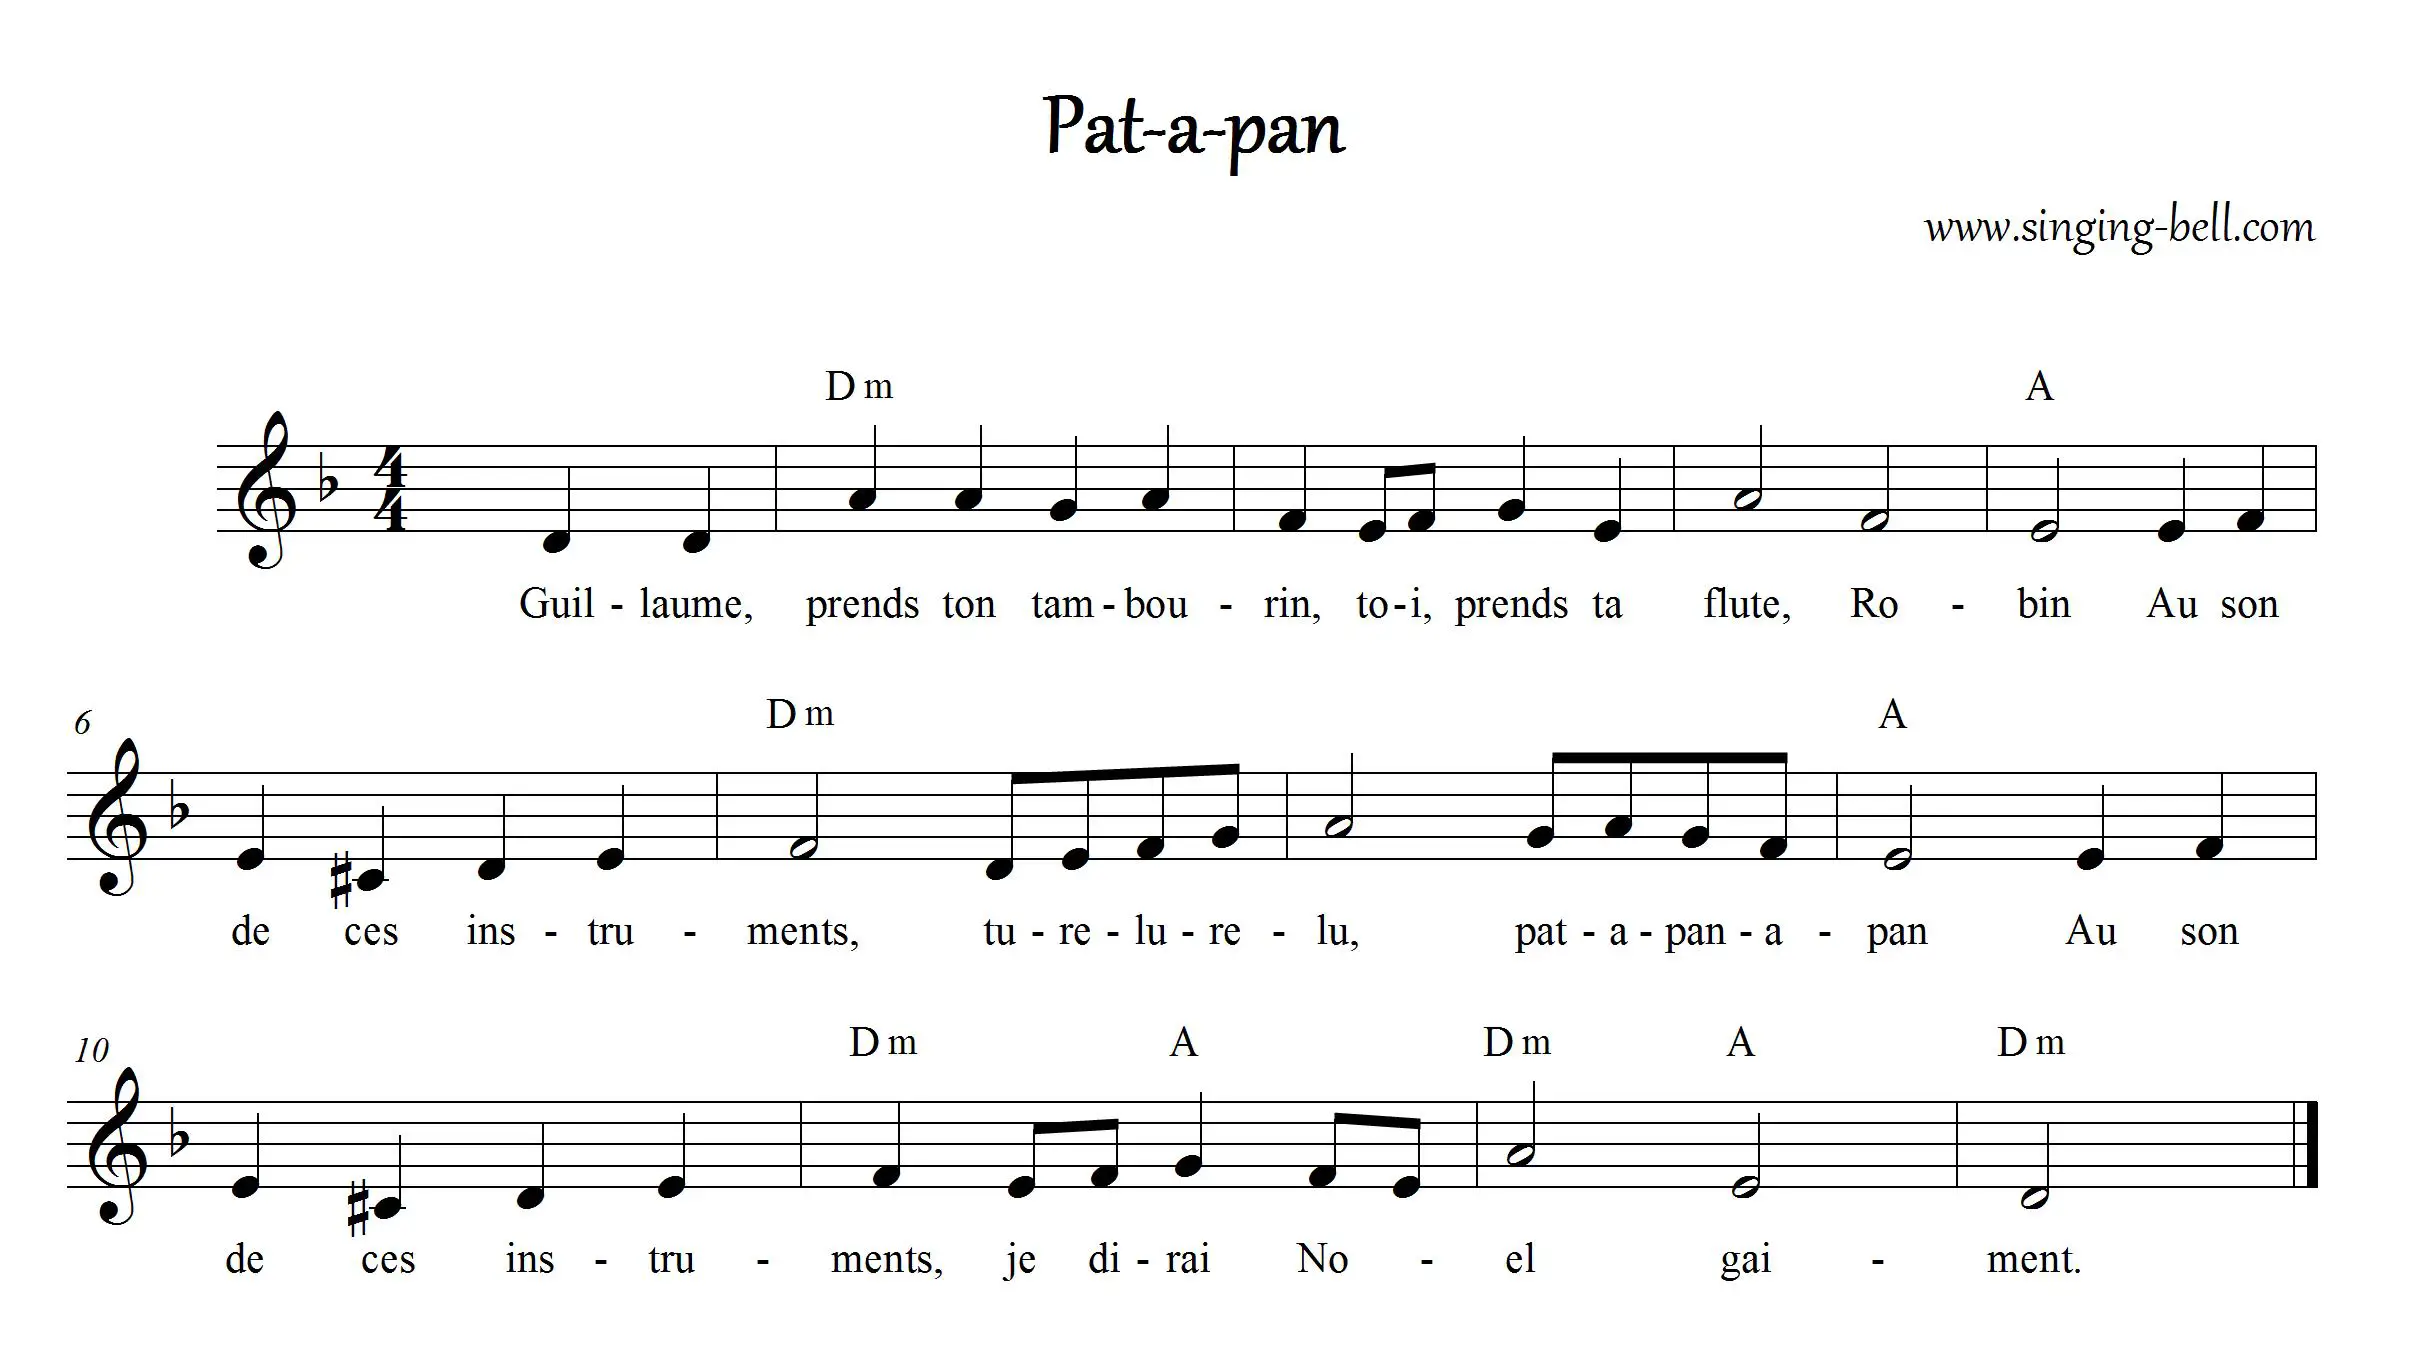 Pat-a-pan (Patapan) - Christmas Music Score (in Dm)